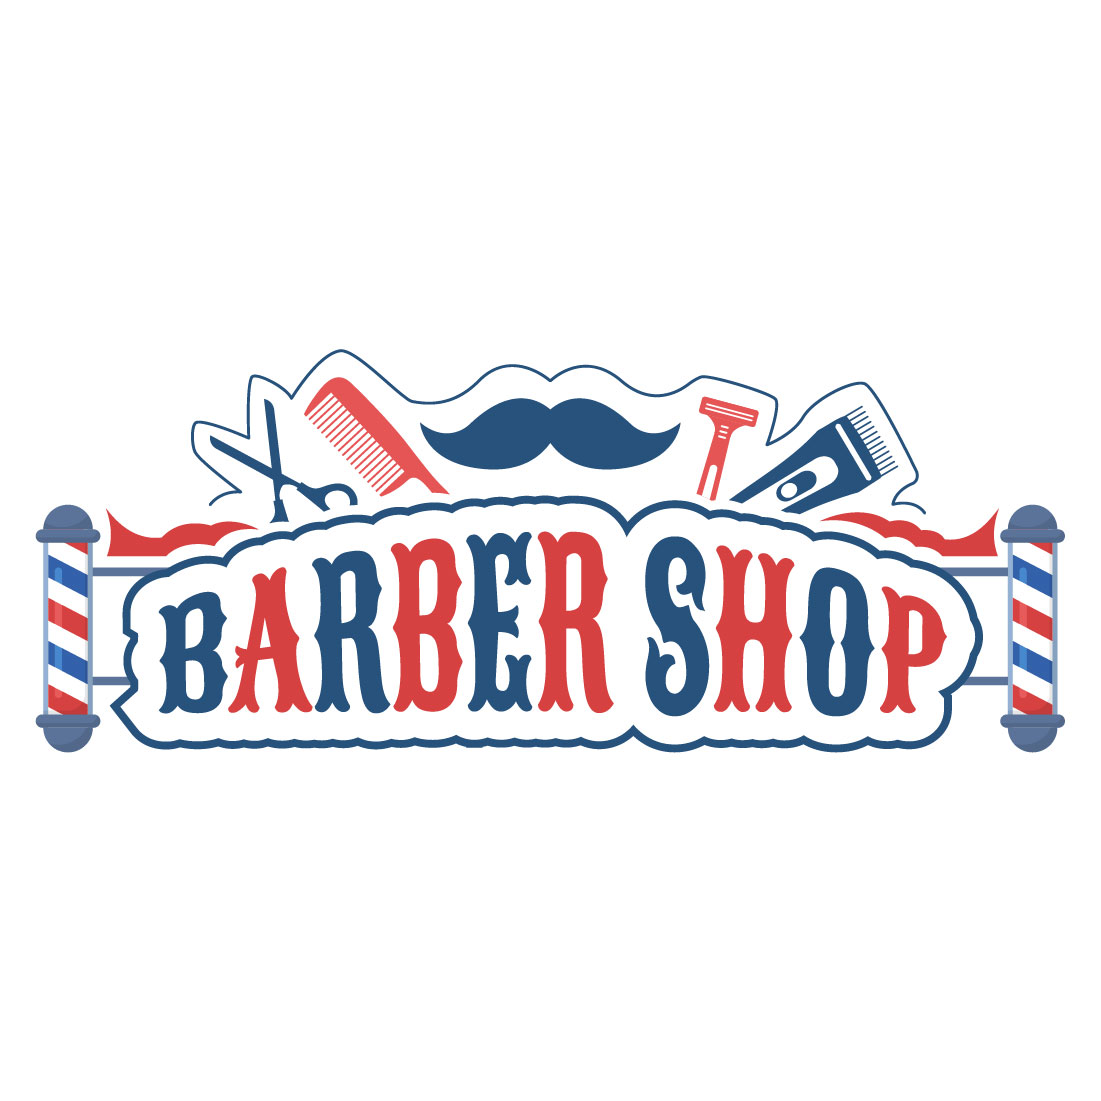 Gorgeous cartoon image of a barbershop logo.